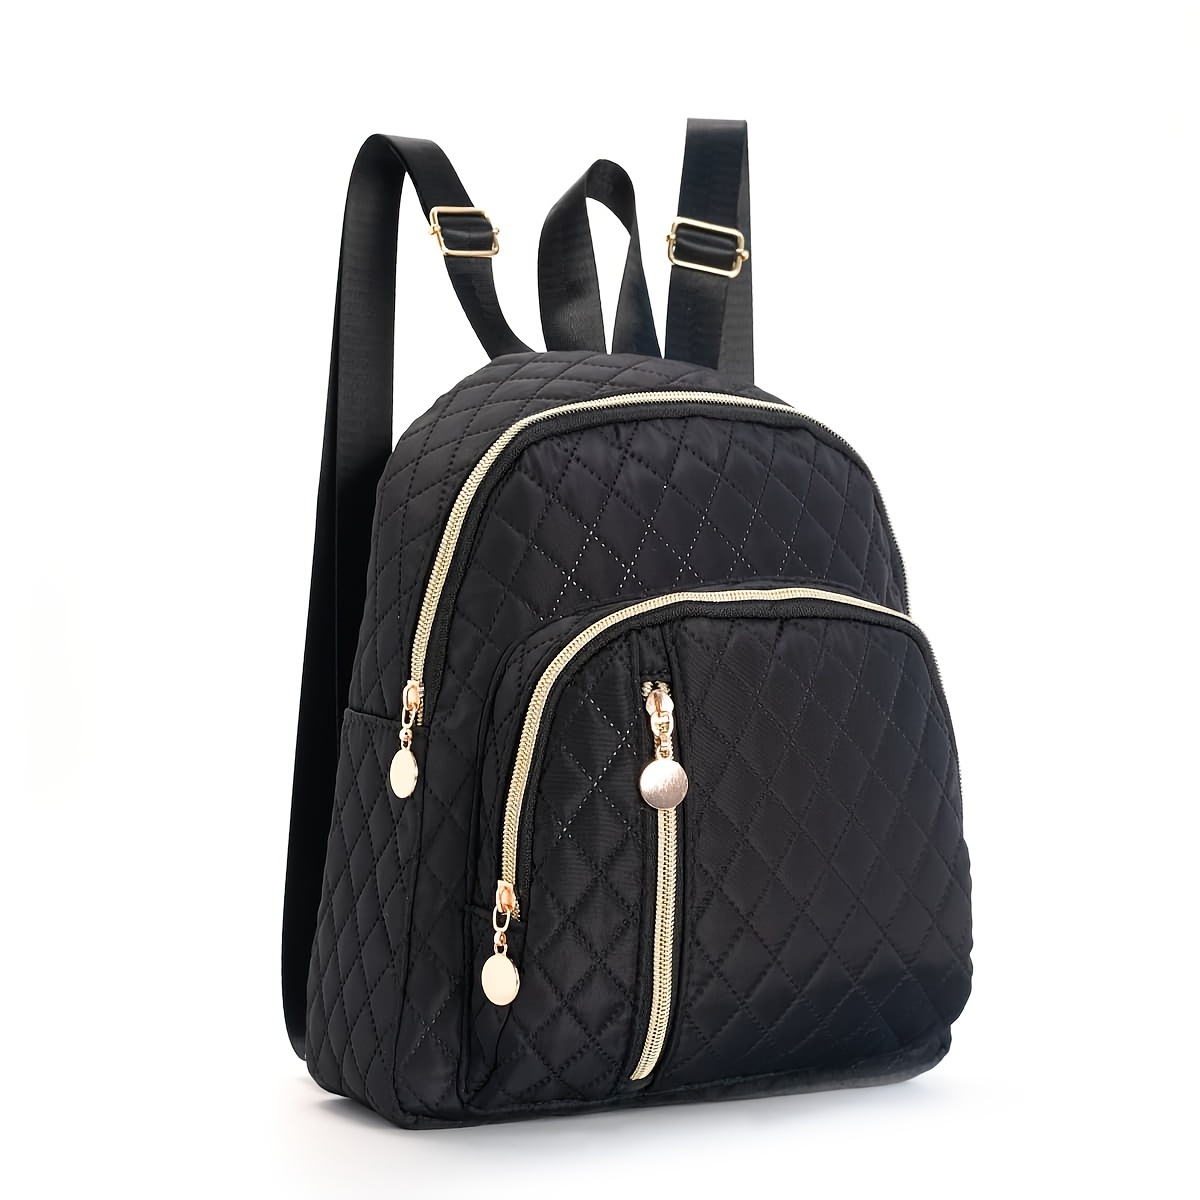 Mochila negra mujer, mochila portatil, mochila escolar, monedero mochila  pequeña, mochila todos los dias, mochila niña negra -  España